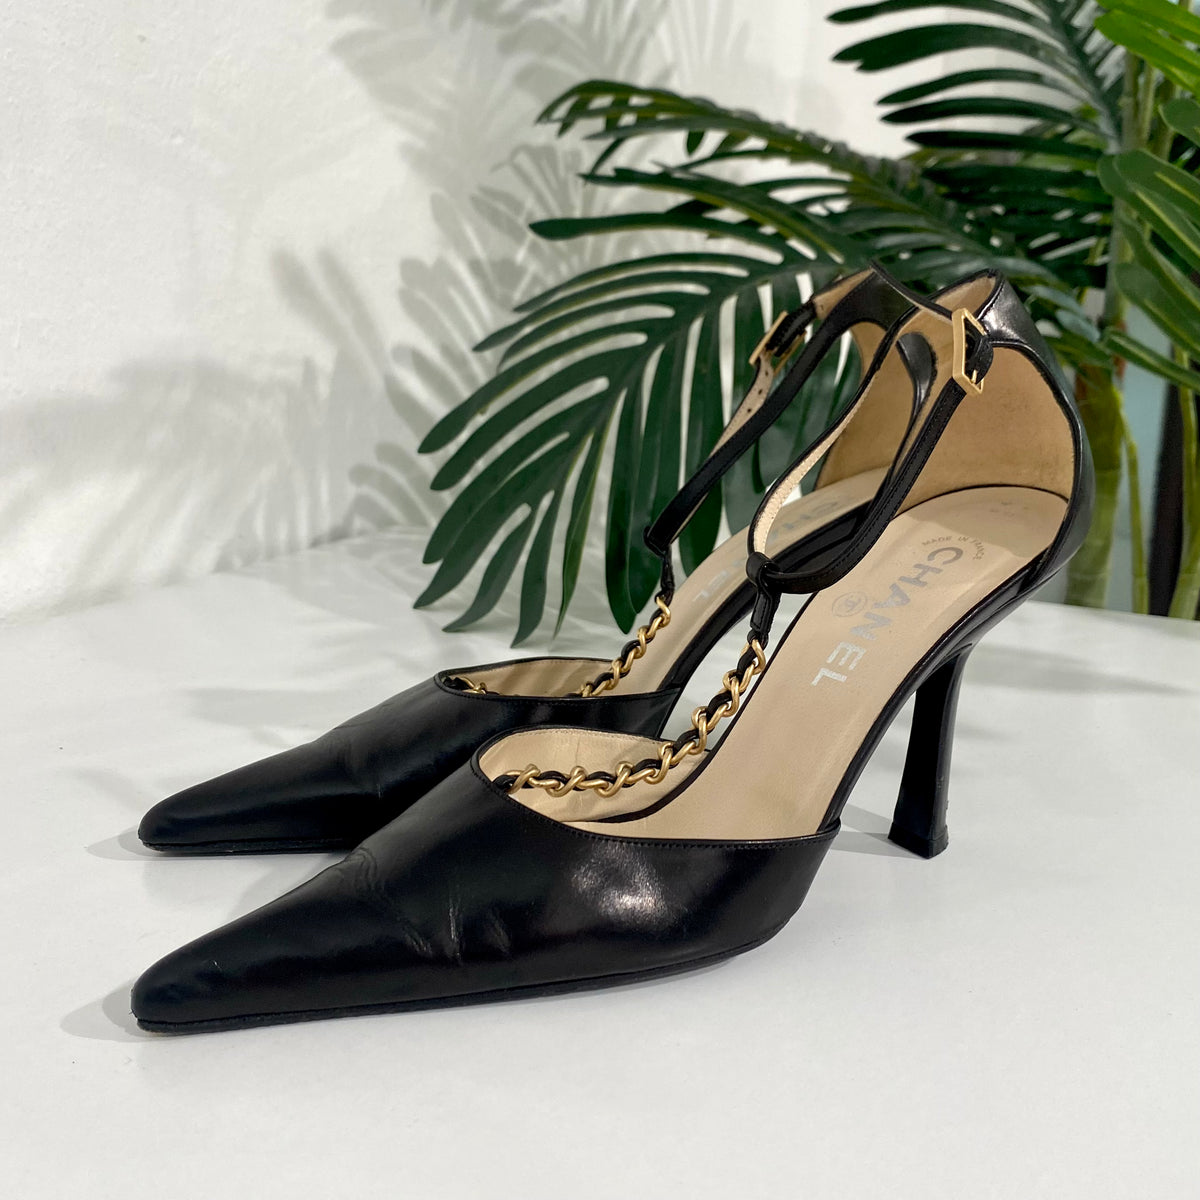 Chanel Vintage Black Slingback Heels – Dina C's Fab and Funky